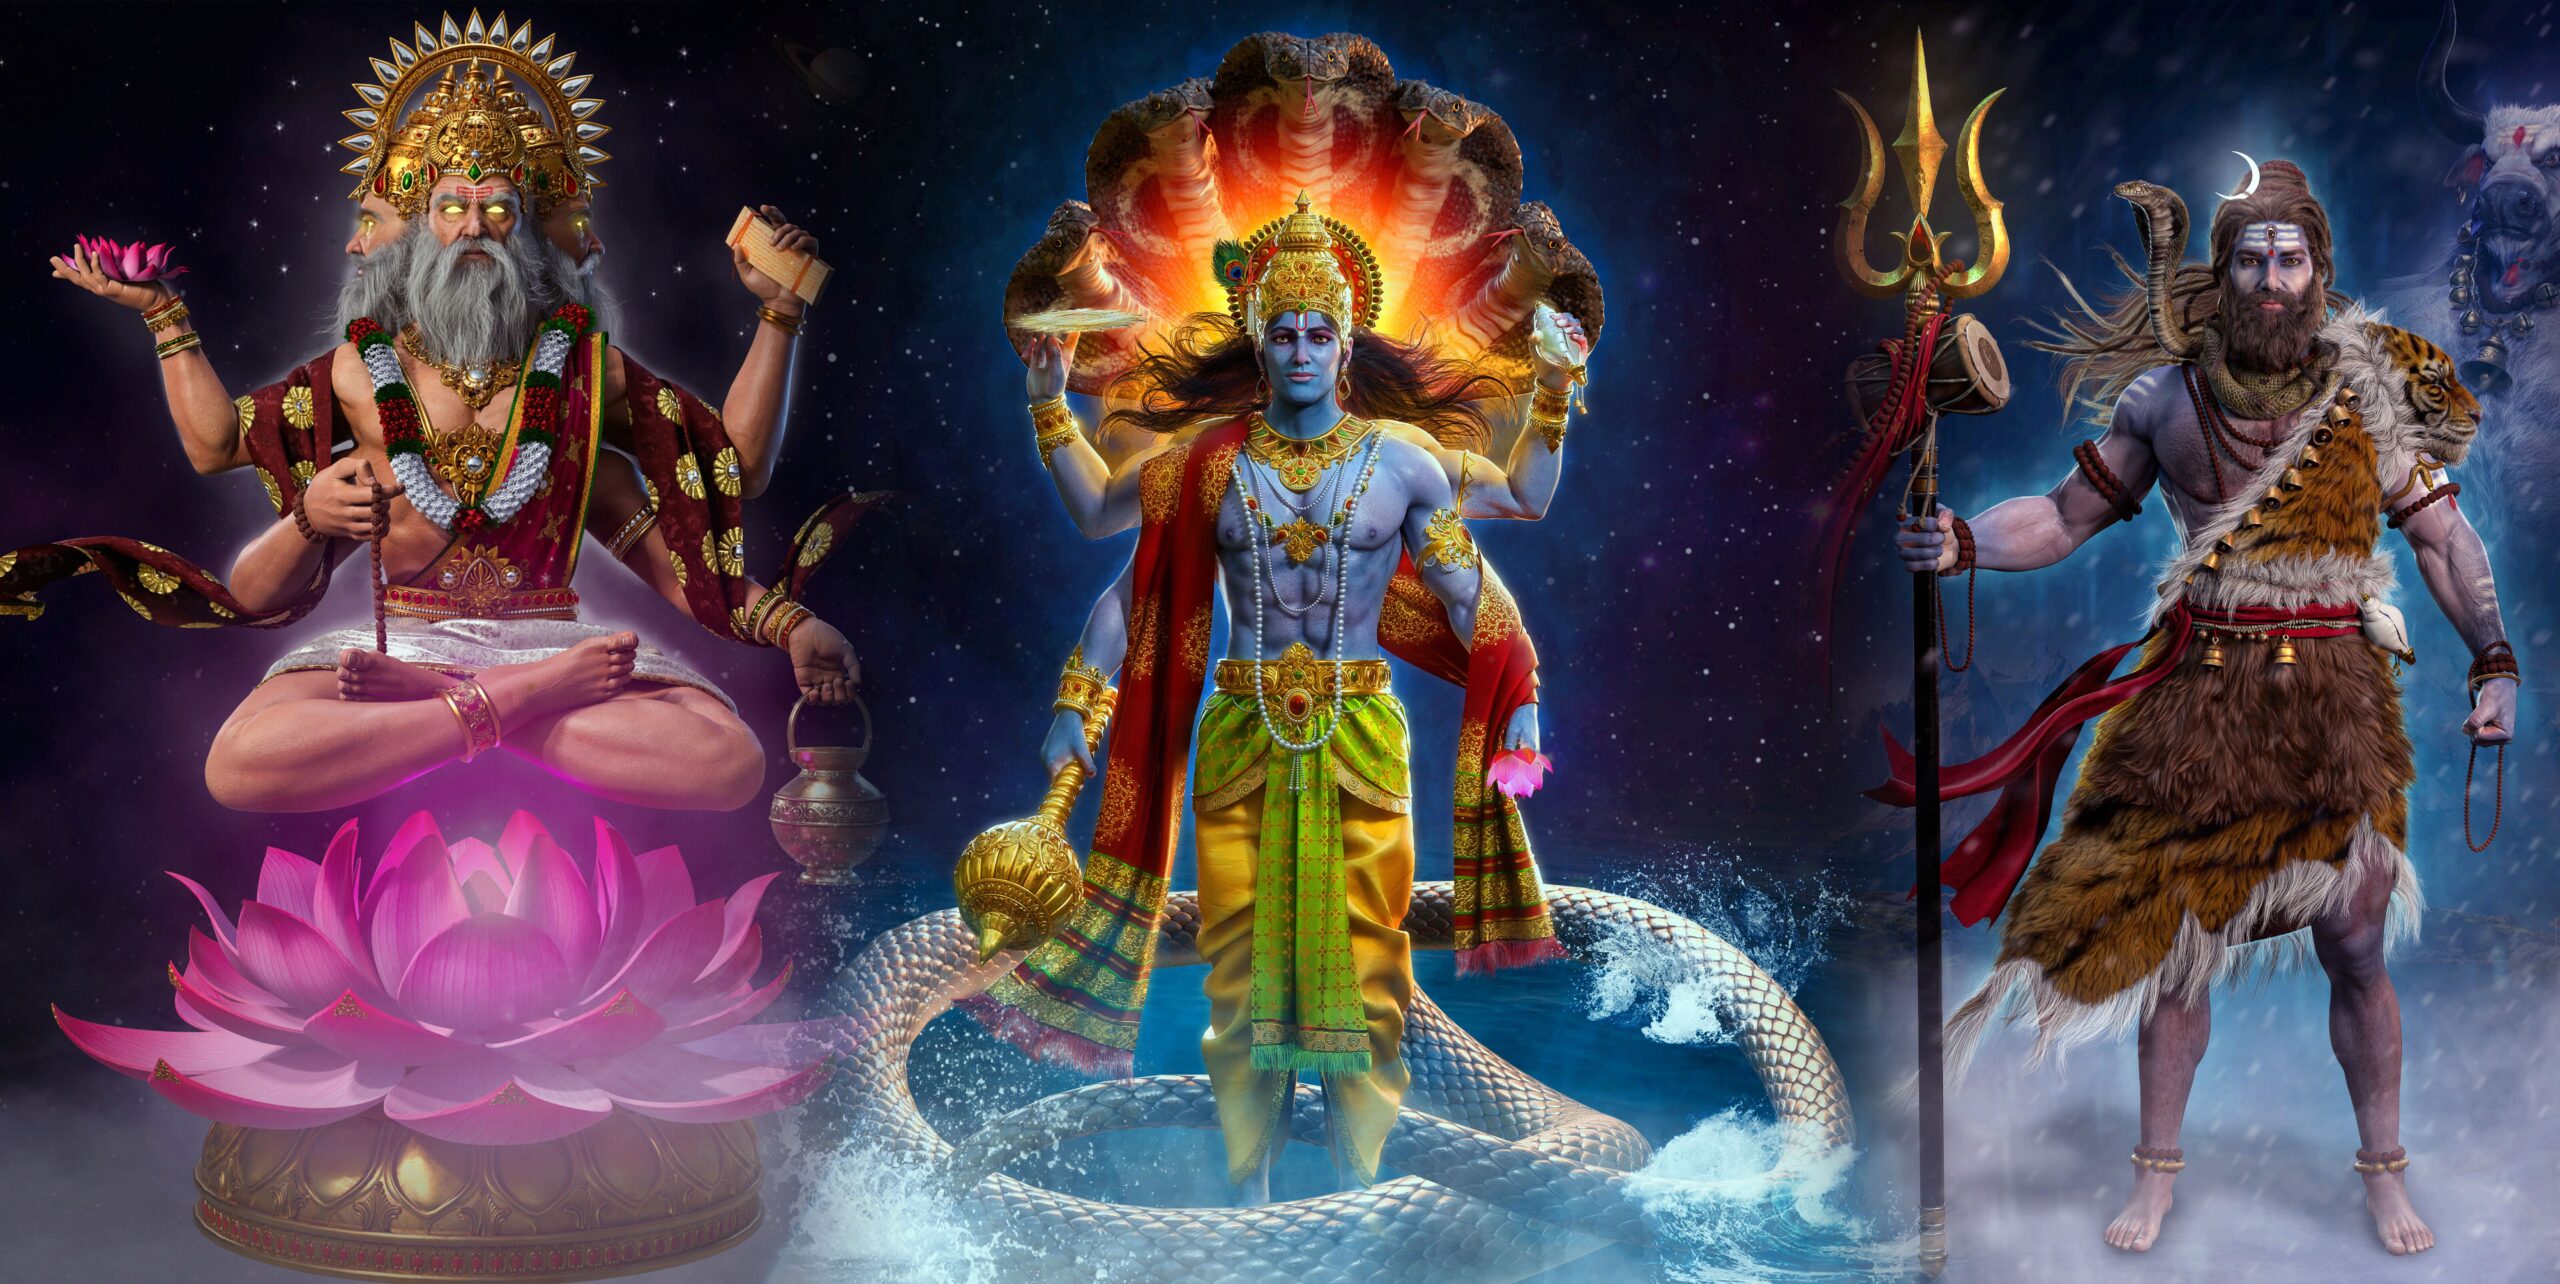 The concept of Trimurti - Brahma, Vishnu, and Shiva.